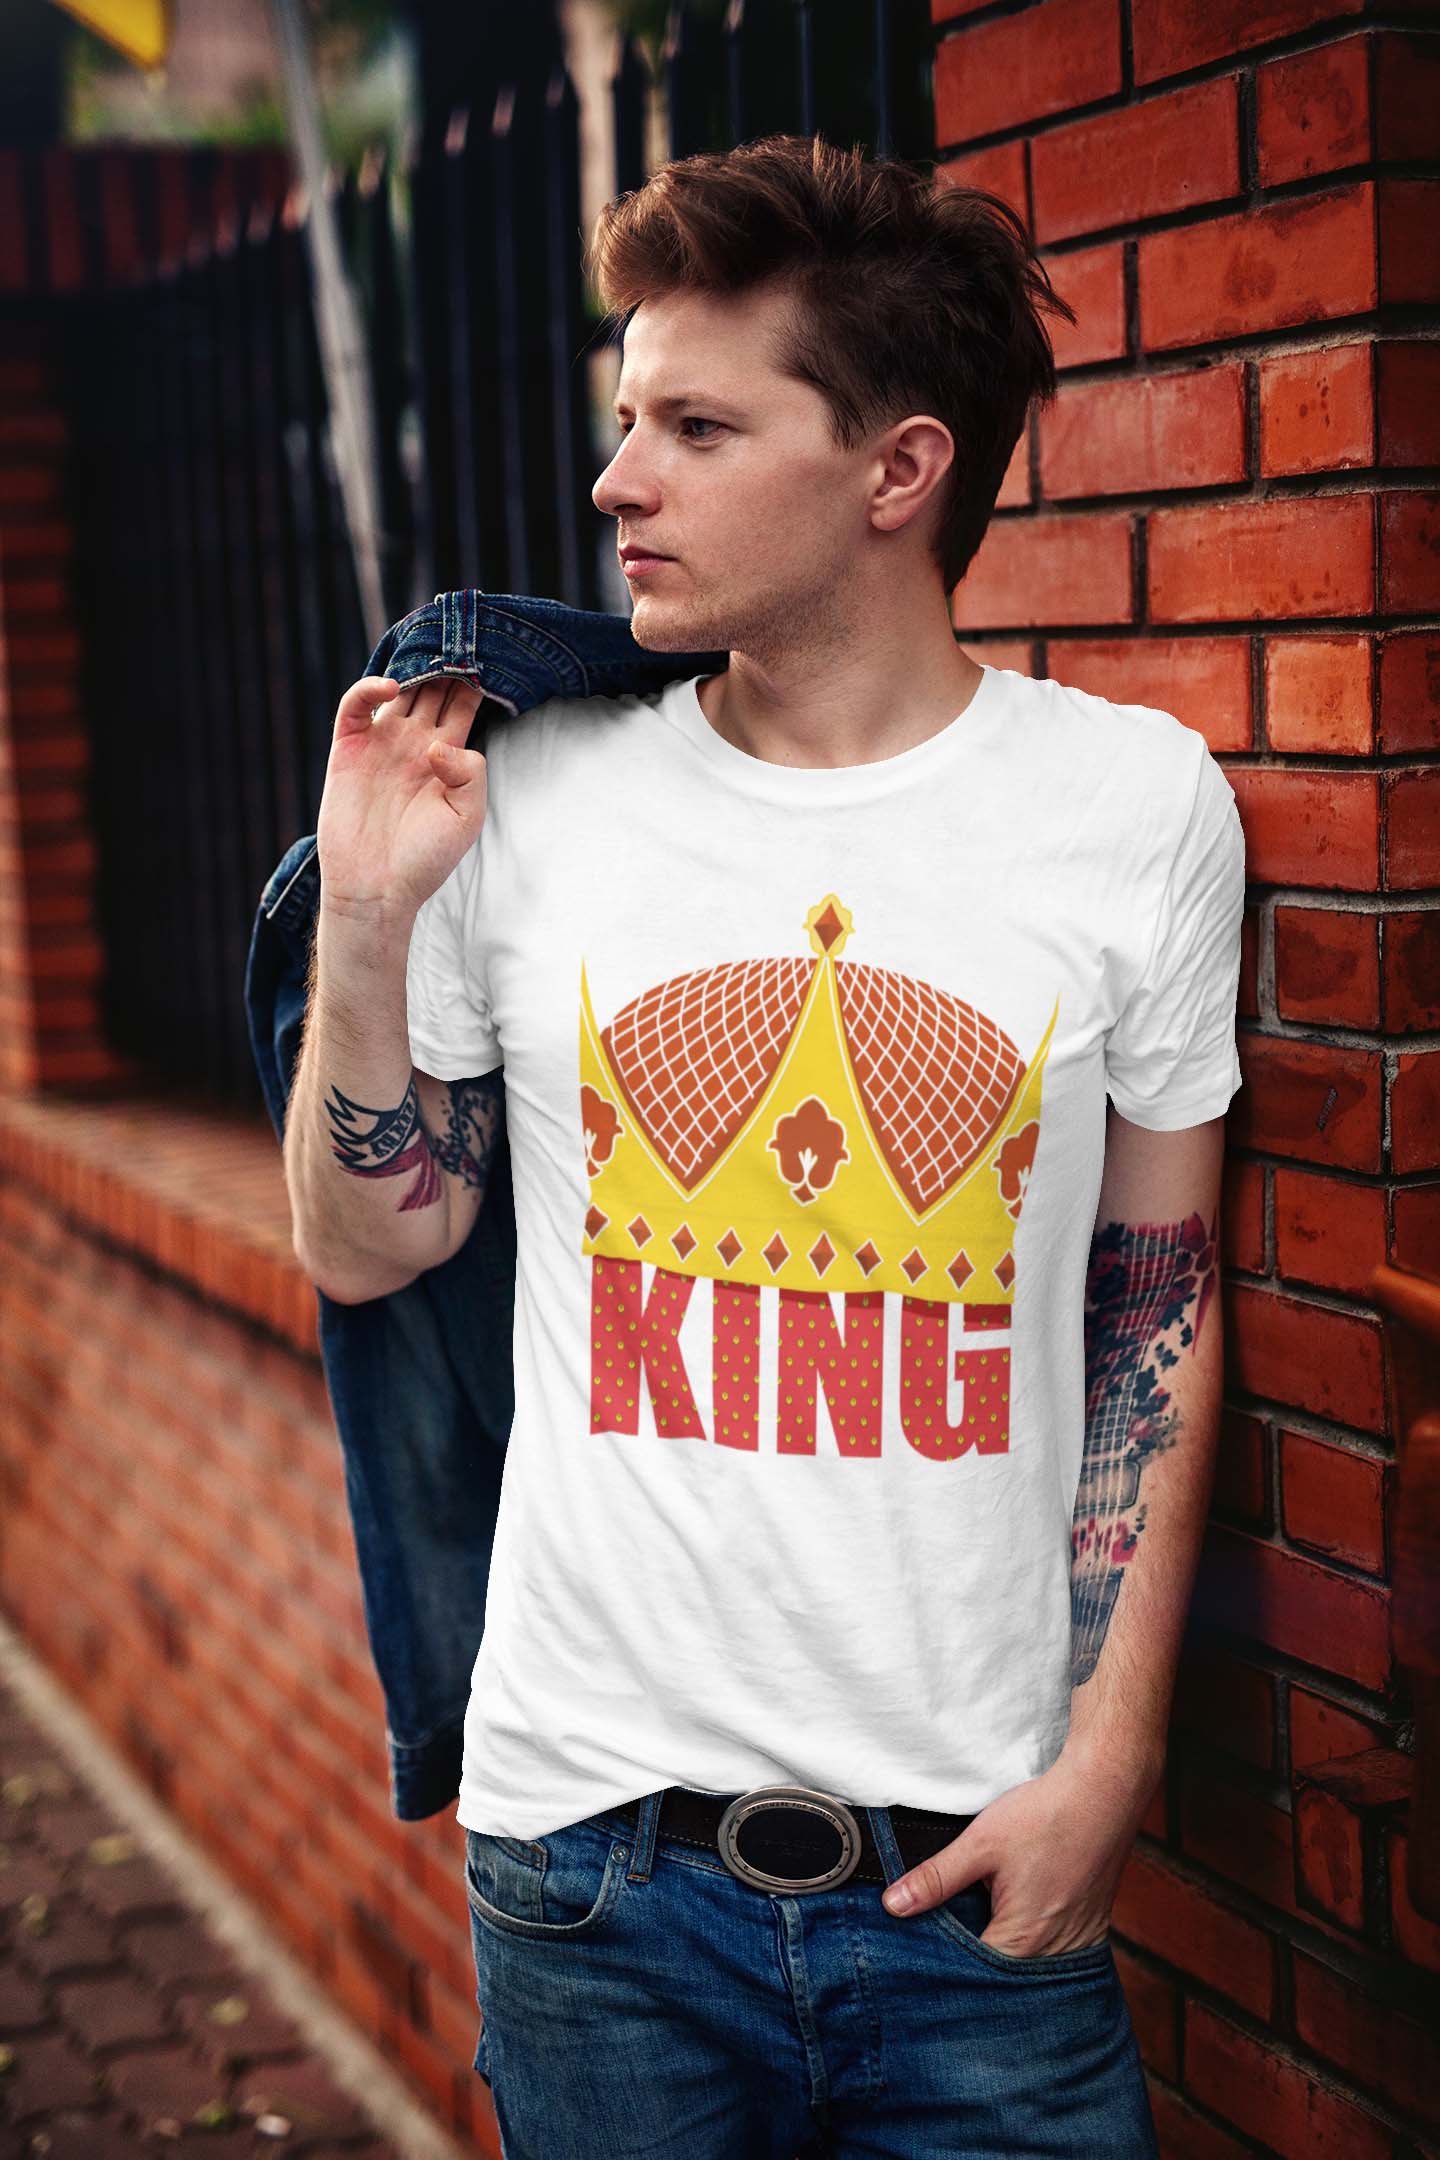 King Men's Cotton T-shirt